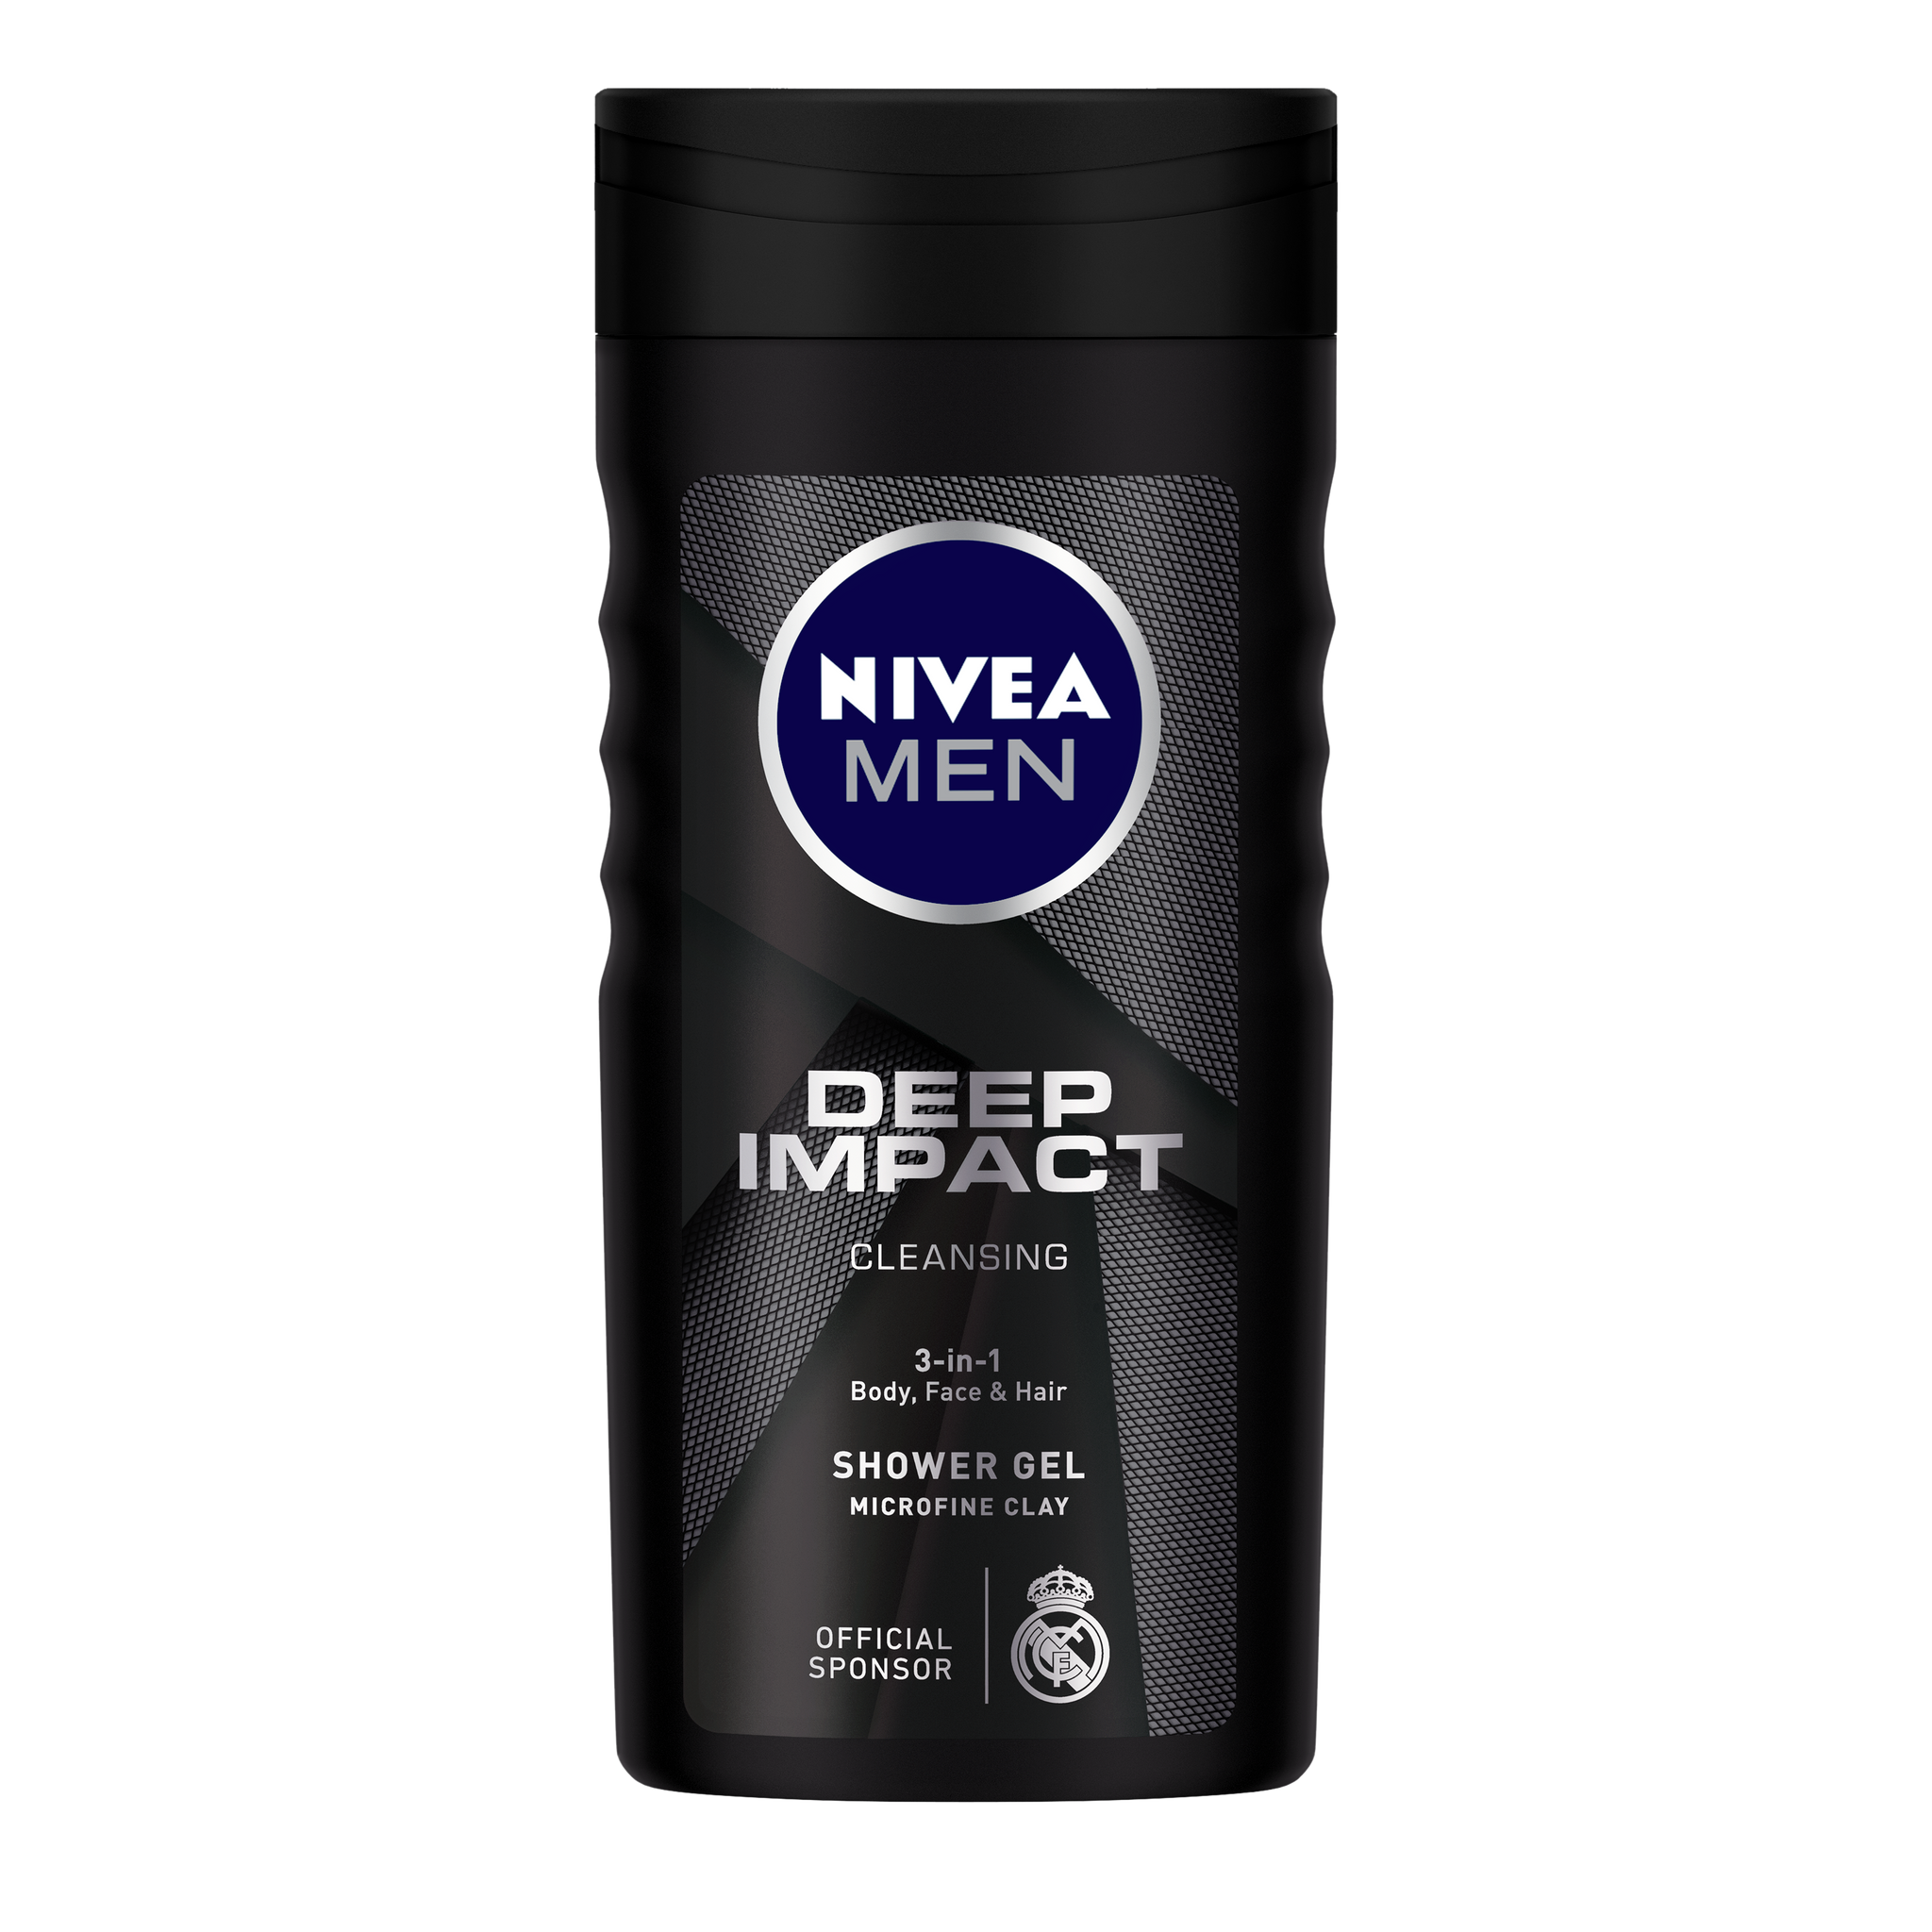 Deep Impact NIVEA shower gel for men 250 ml